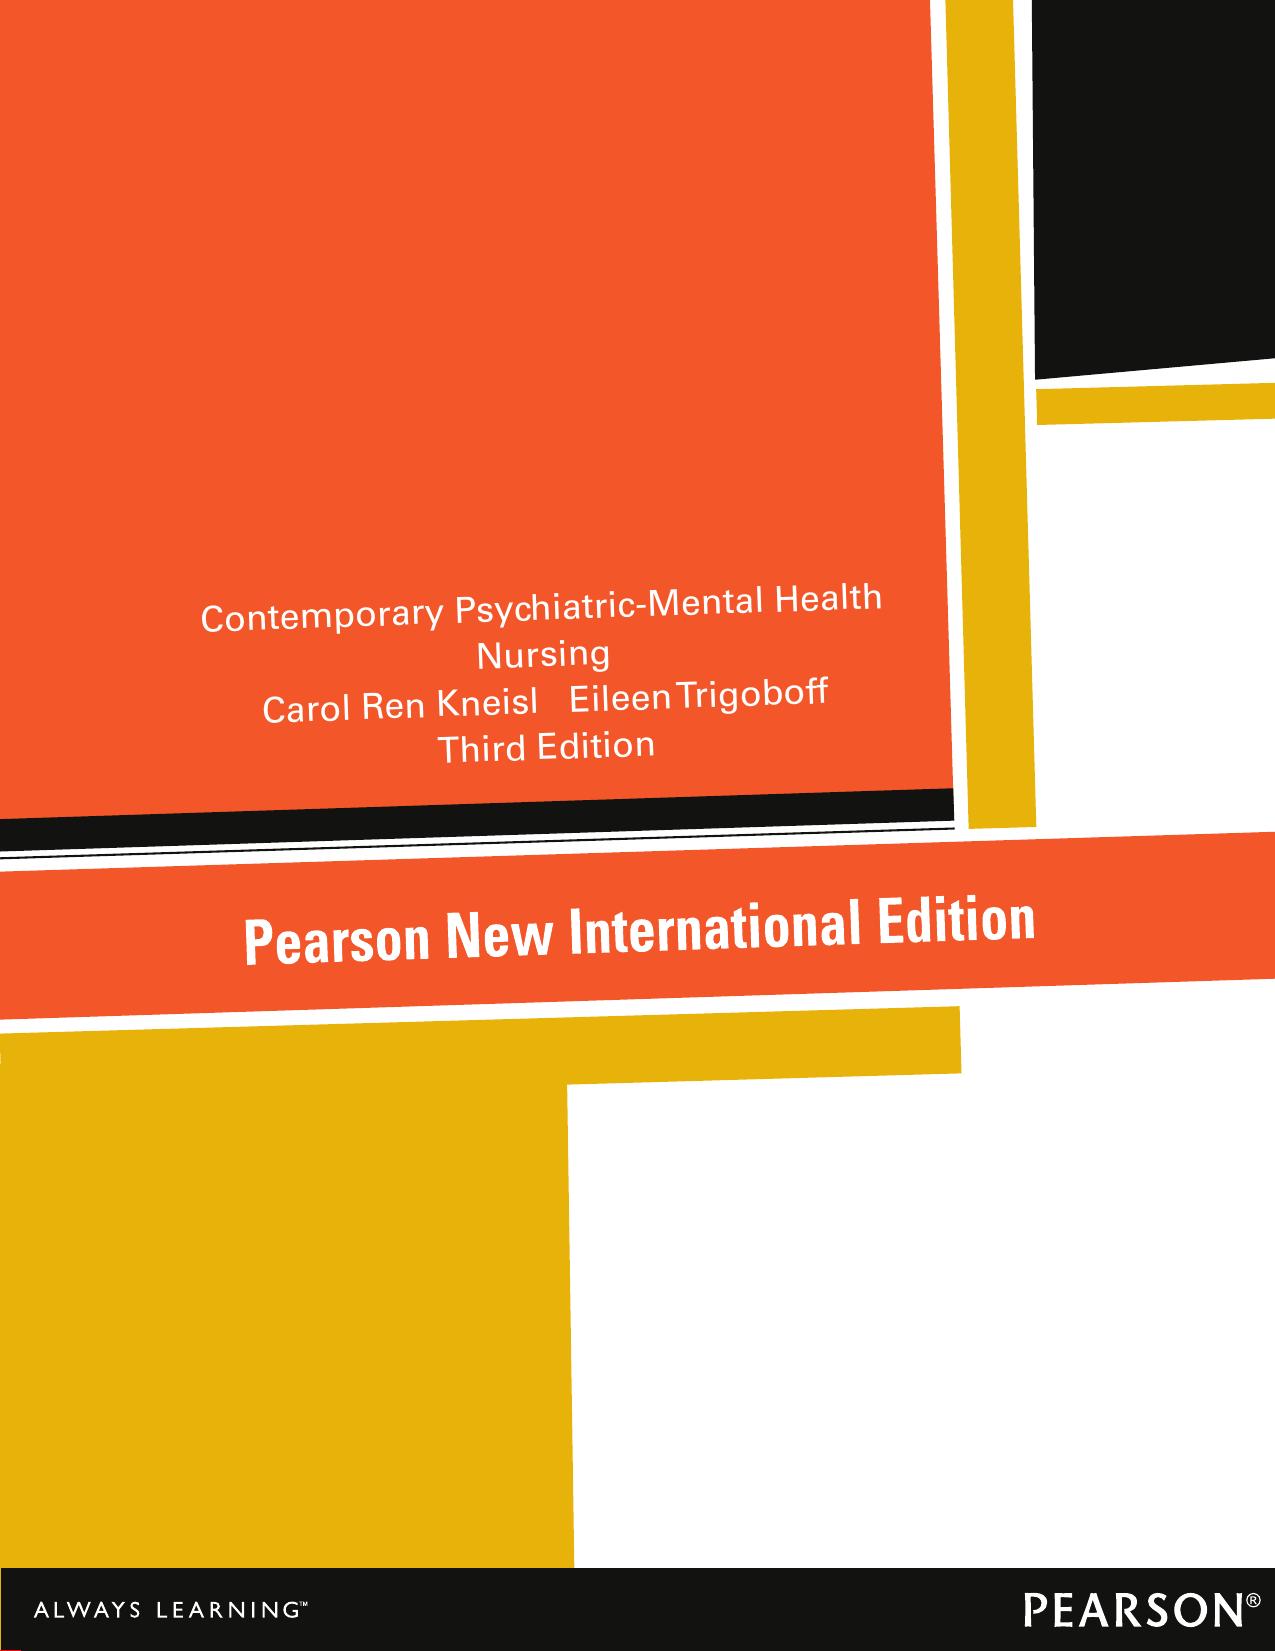 Contemporary Psychiatric-Mental Health Nursing 3_E.jpg